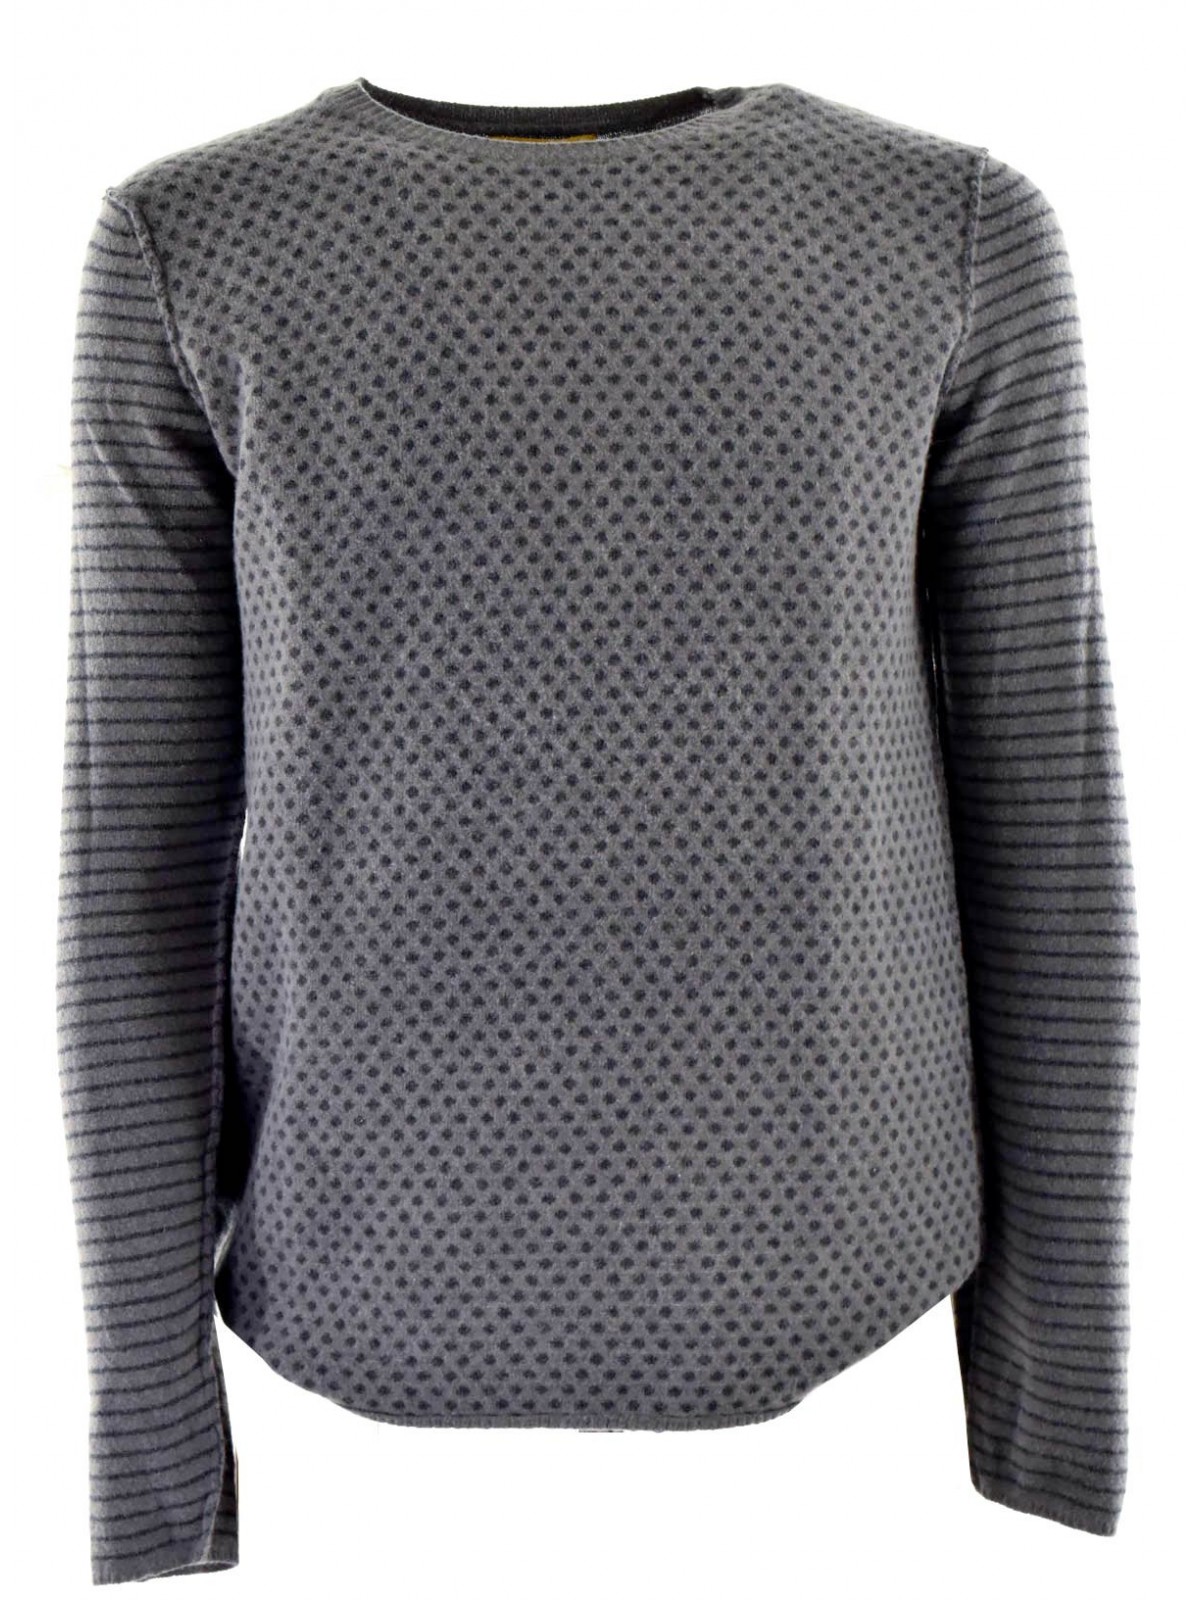 Men's gray Hypster shirt with polka dots